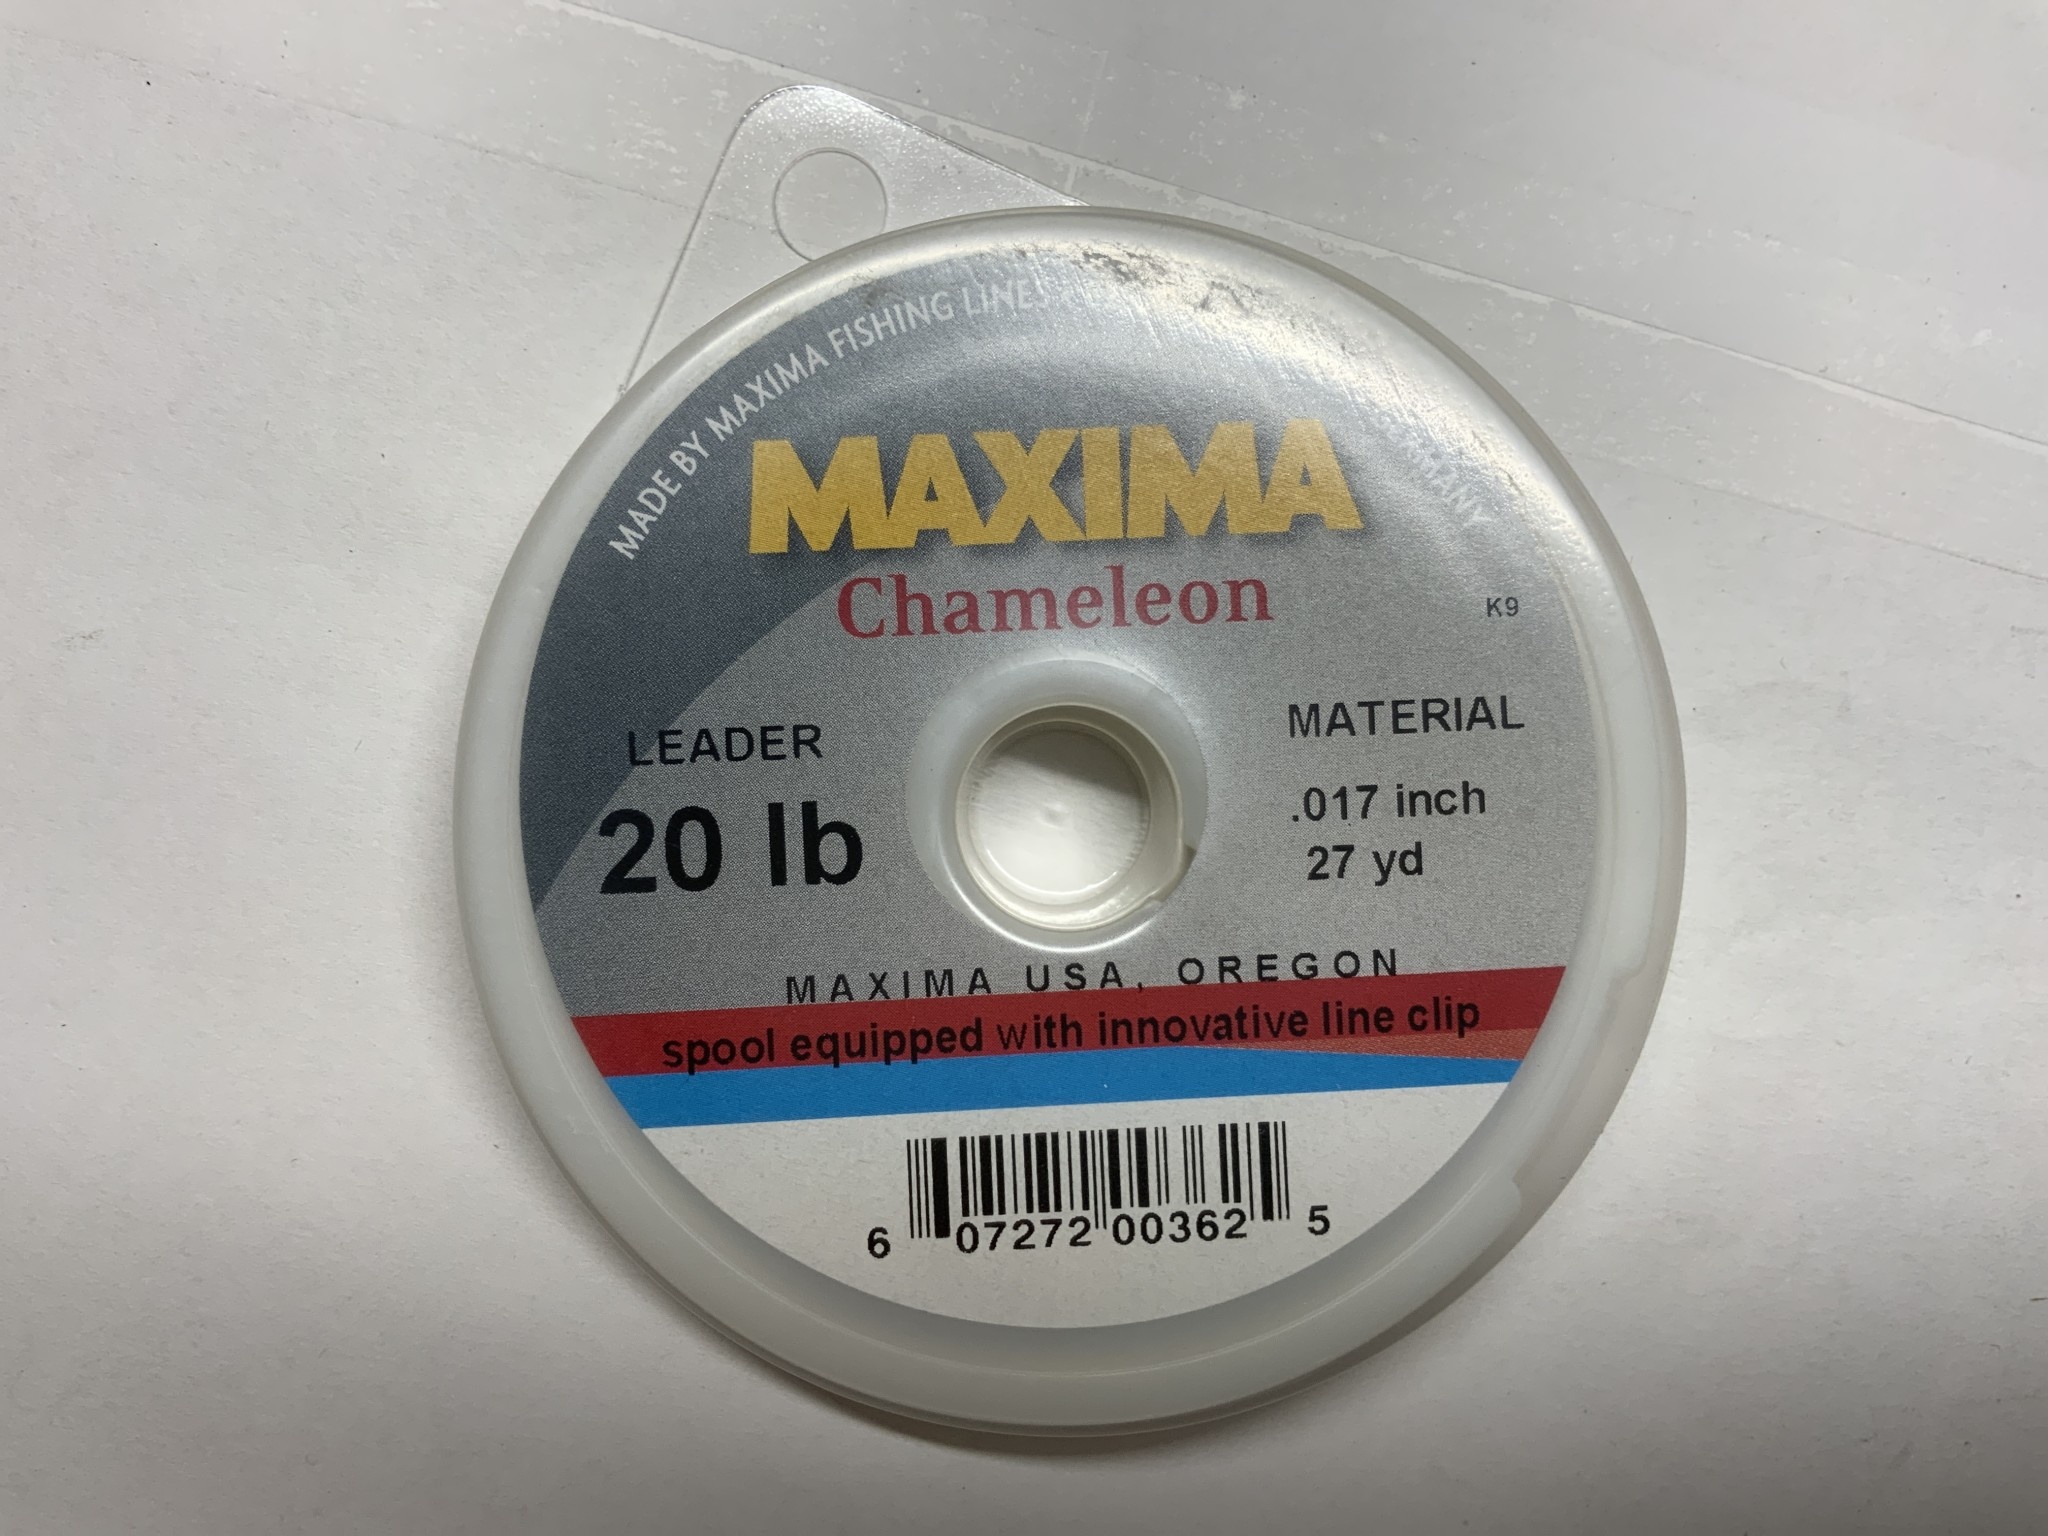 Maxima USA, Inc. Maxima Chameleon Leader Material 27 YD - All Seasons Sports